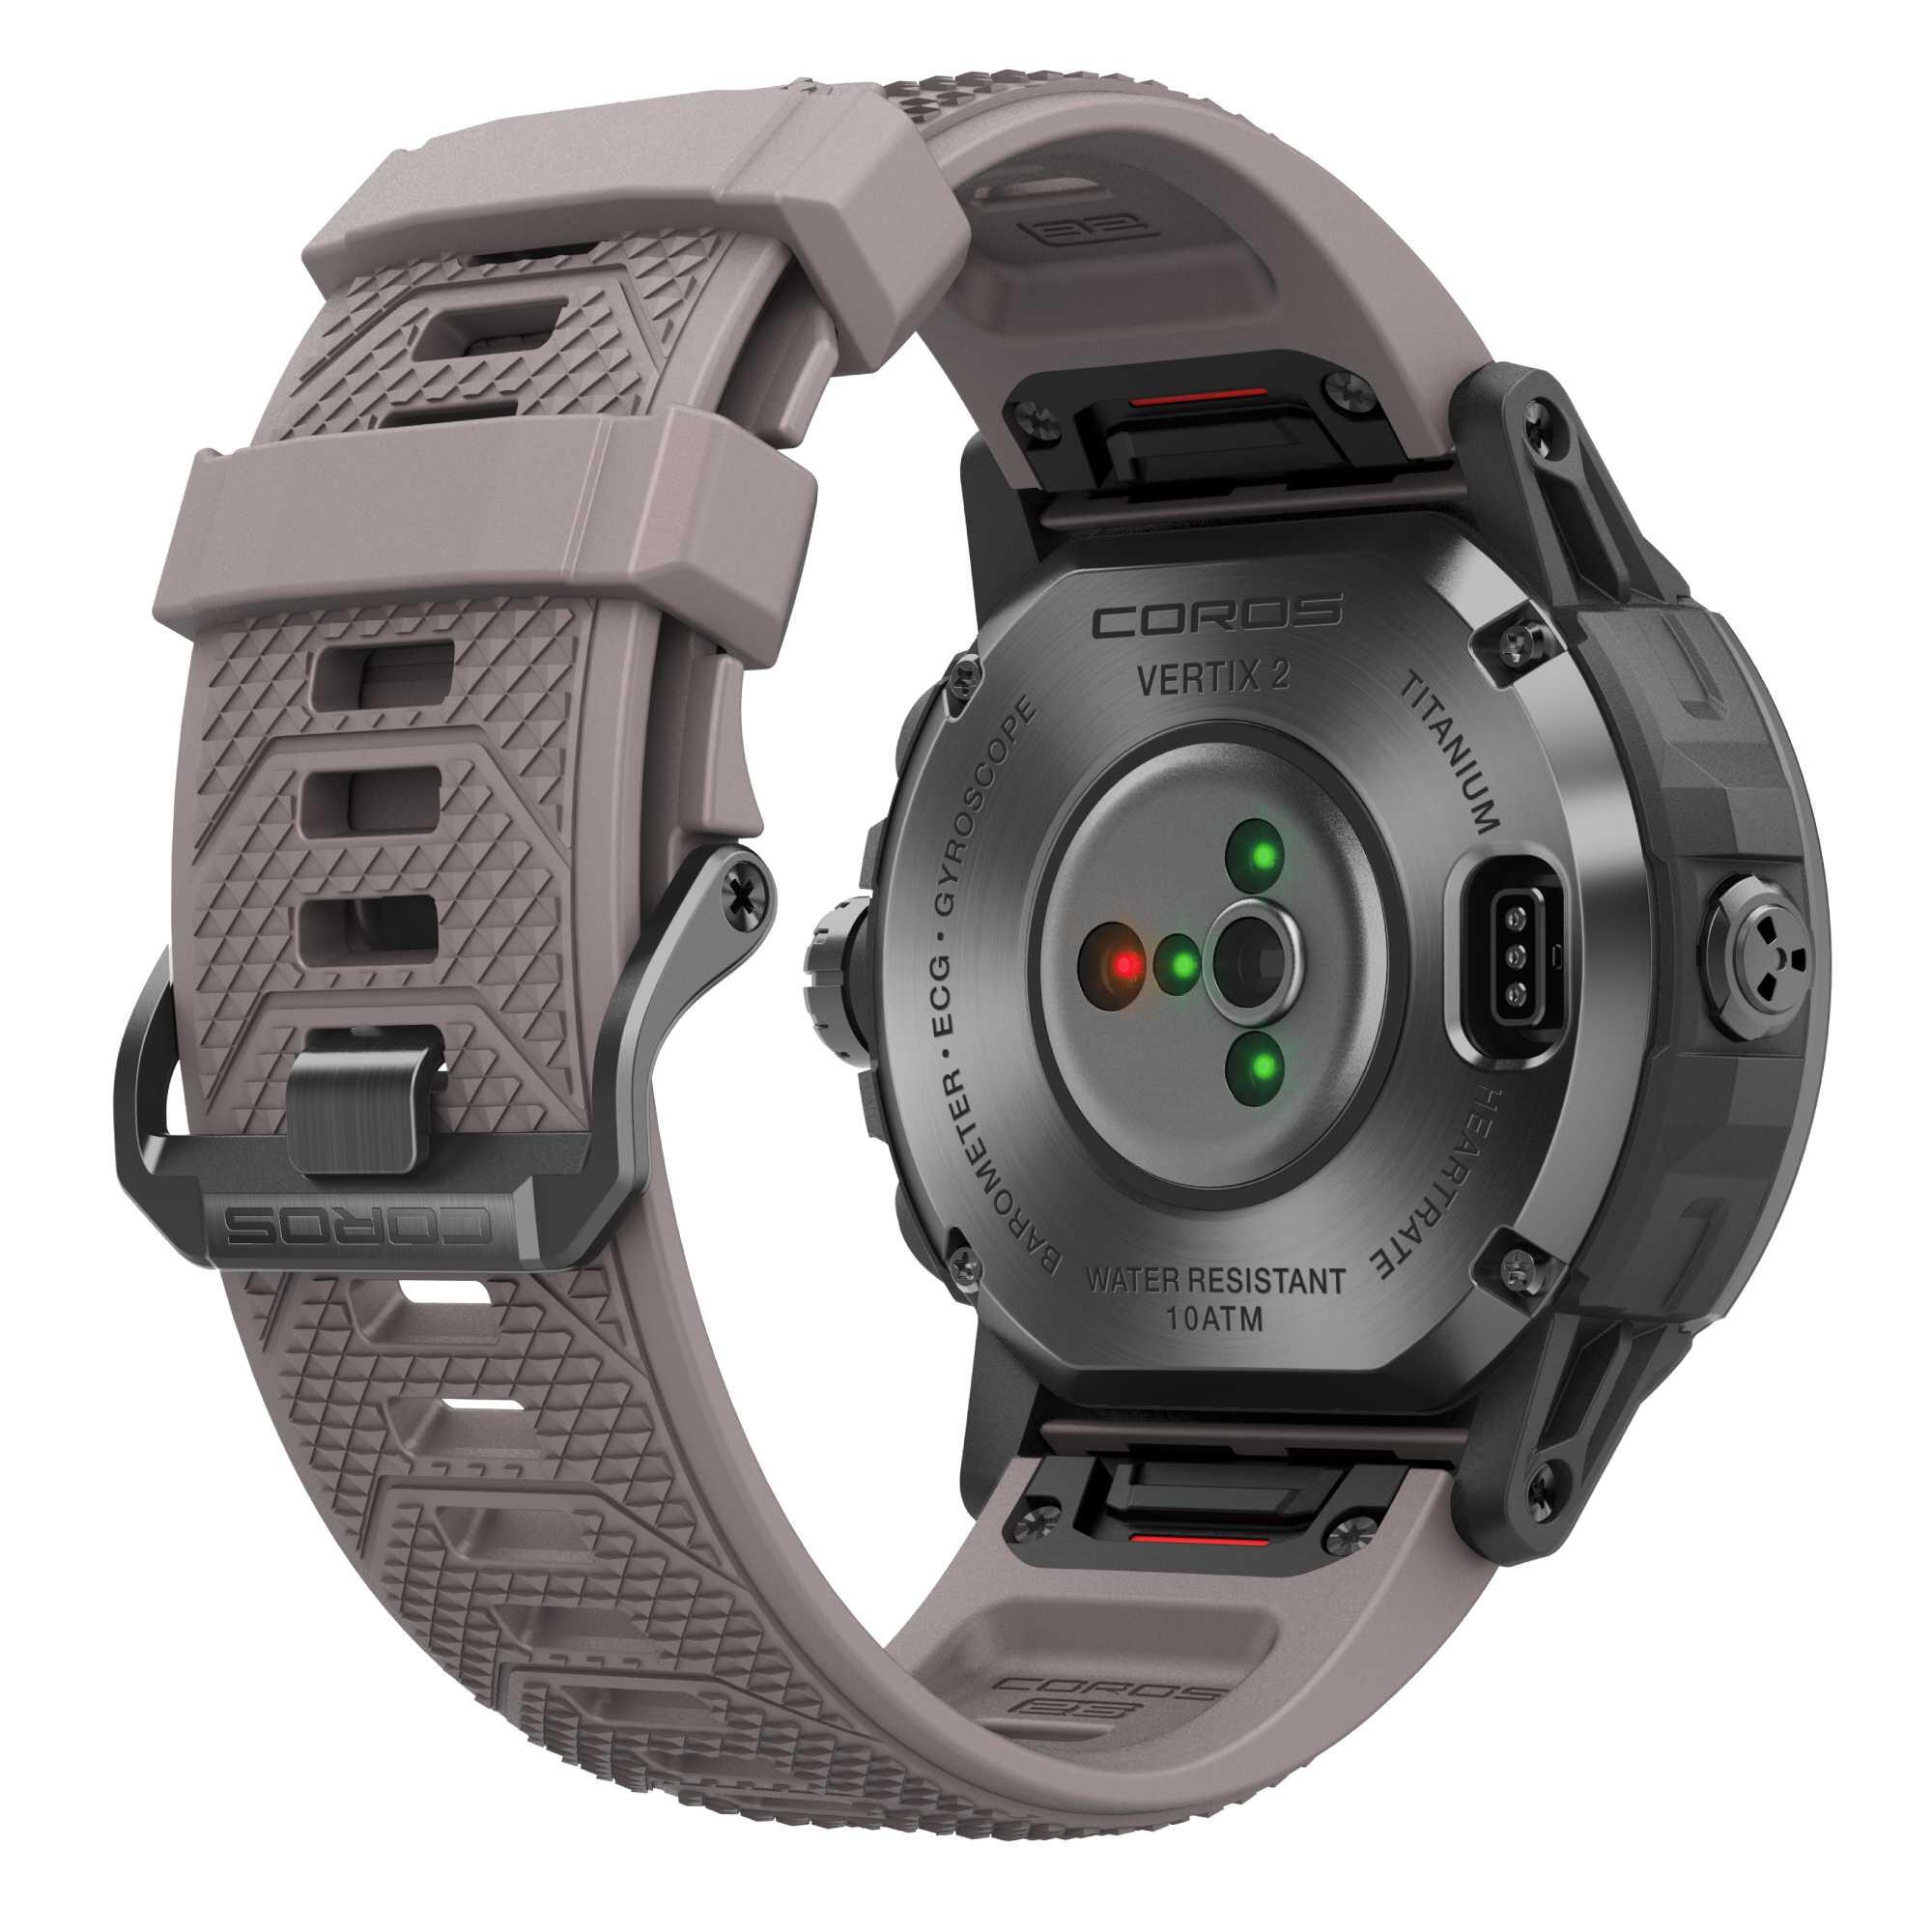 Running adventure GPS HR monitor smartwatch - COROS VERTIX 2 - grey 5/5